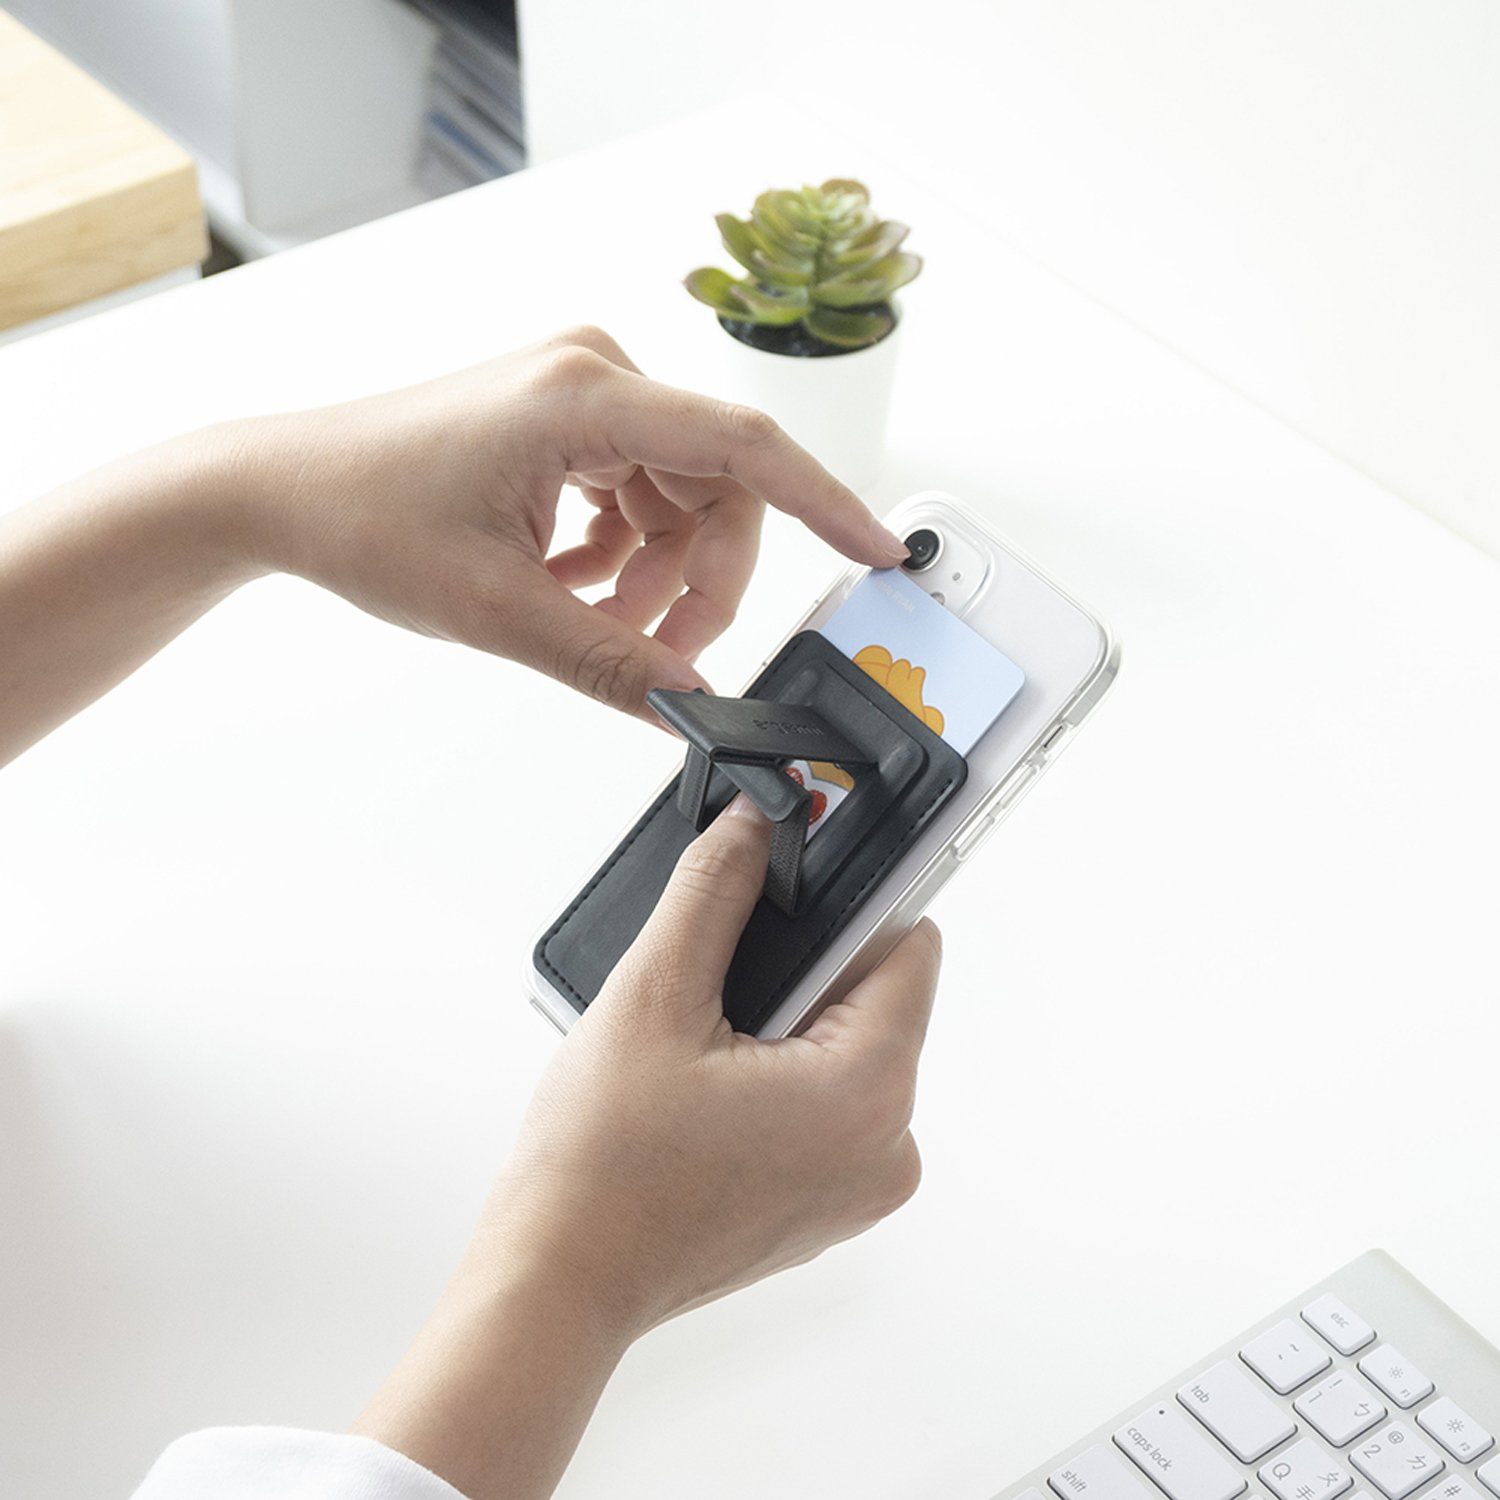 Ergomi Hercules Wallet Adhesive Cardholder Phone Stand, Black Default Ergomi 